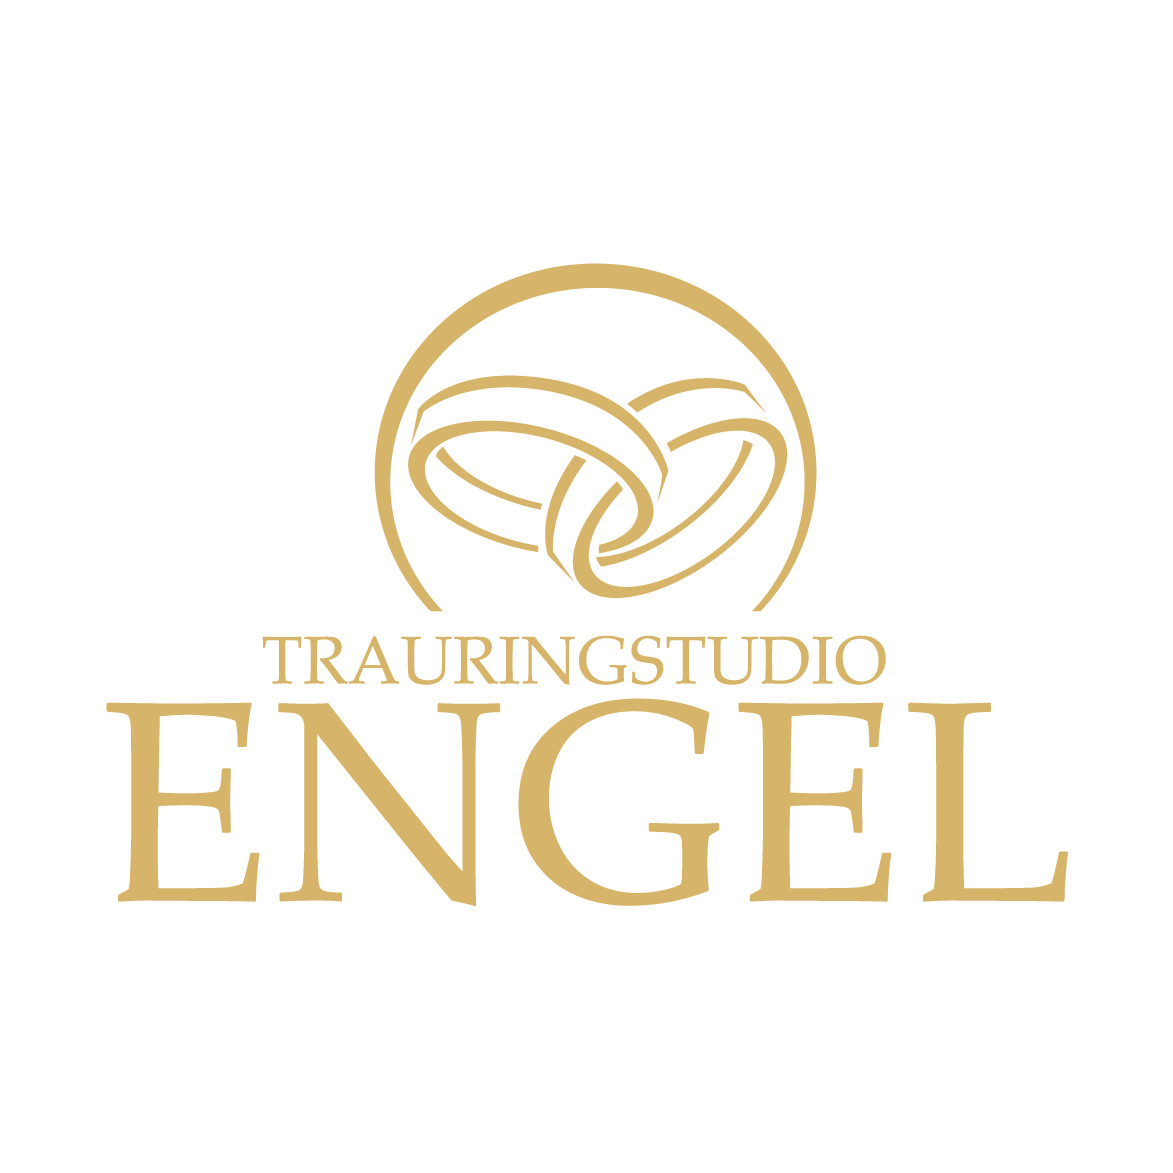 Engel Trauringstudio in Brandenburg an der Havel - Logo